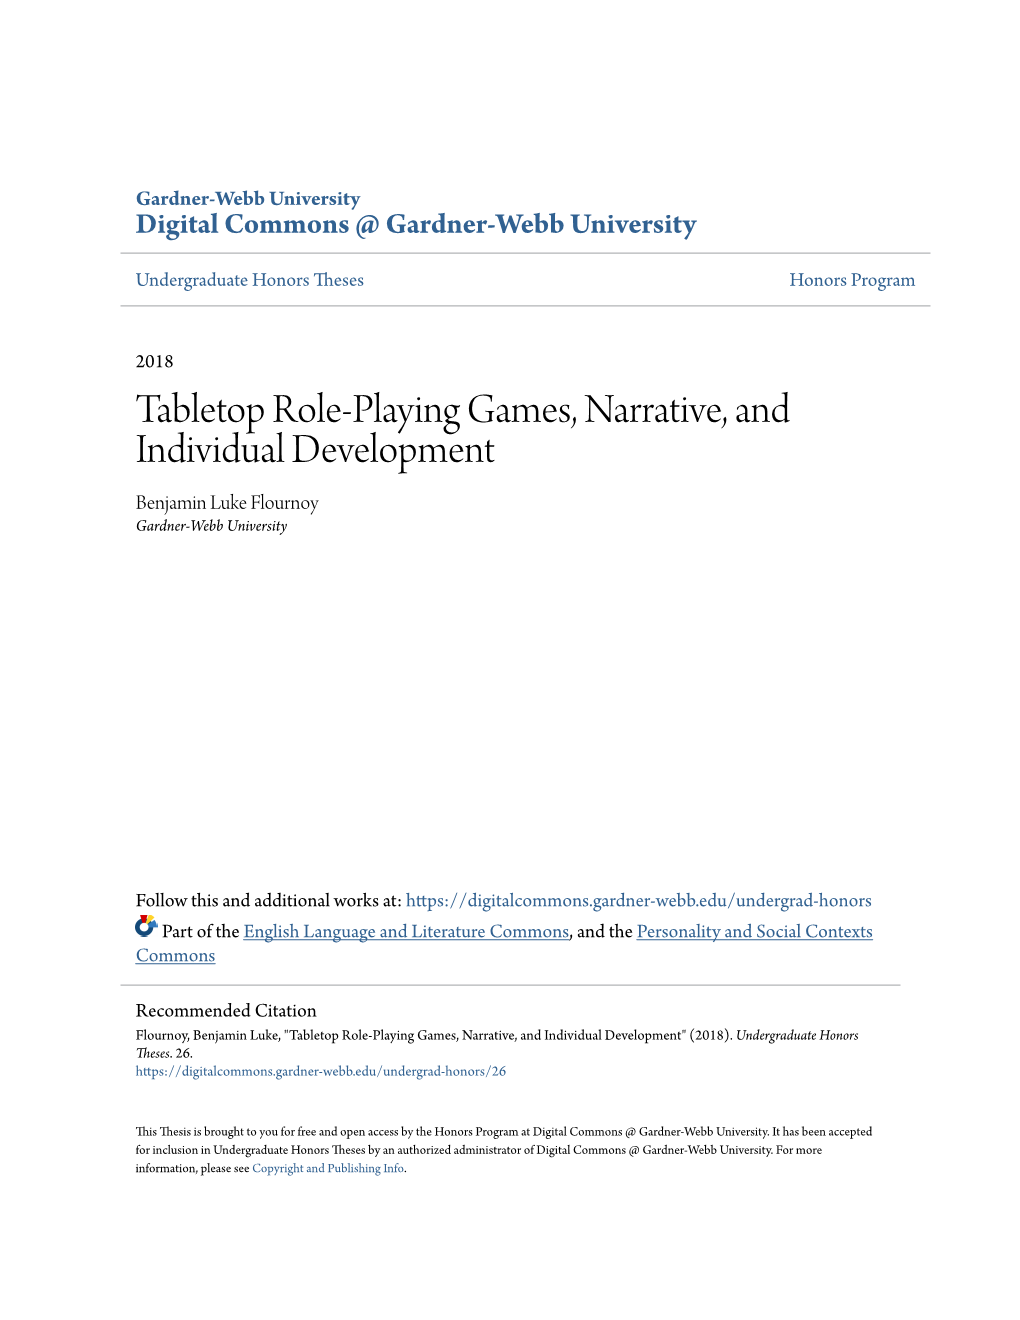 Tabletop Role-Playing Games, Narrative, and Individual Development Benjamin Luke Flournoy Gardner-Webb University